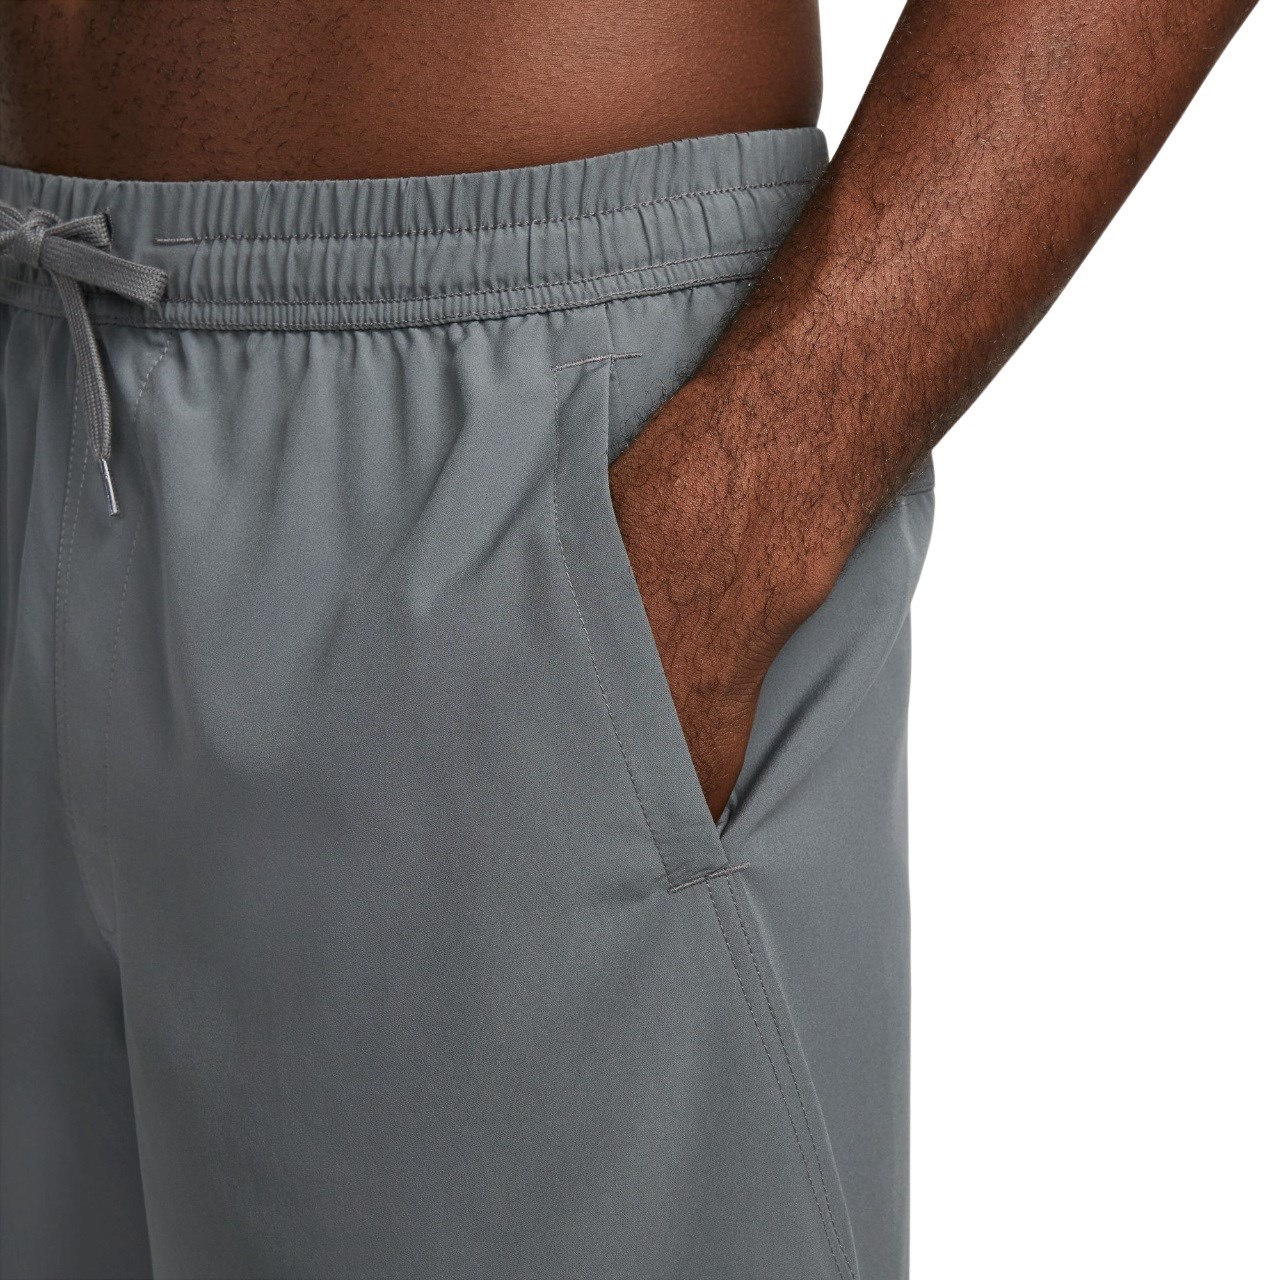 Nike Dri-Fit 7 Inch Unlined Versatile Mens Running Shorts - Iron Grey ...